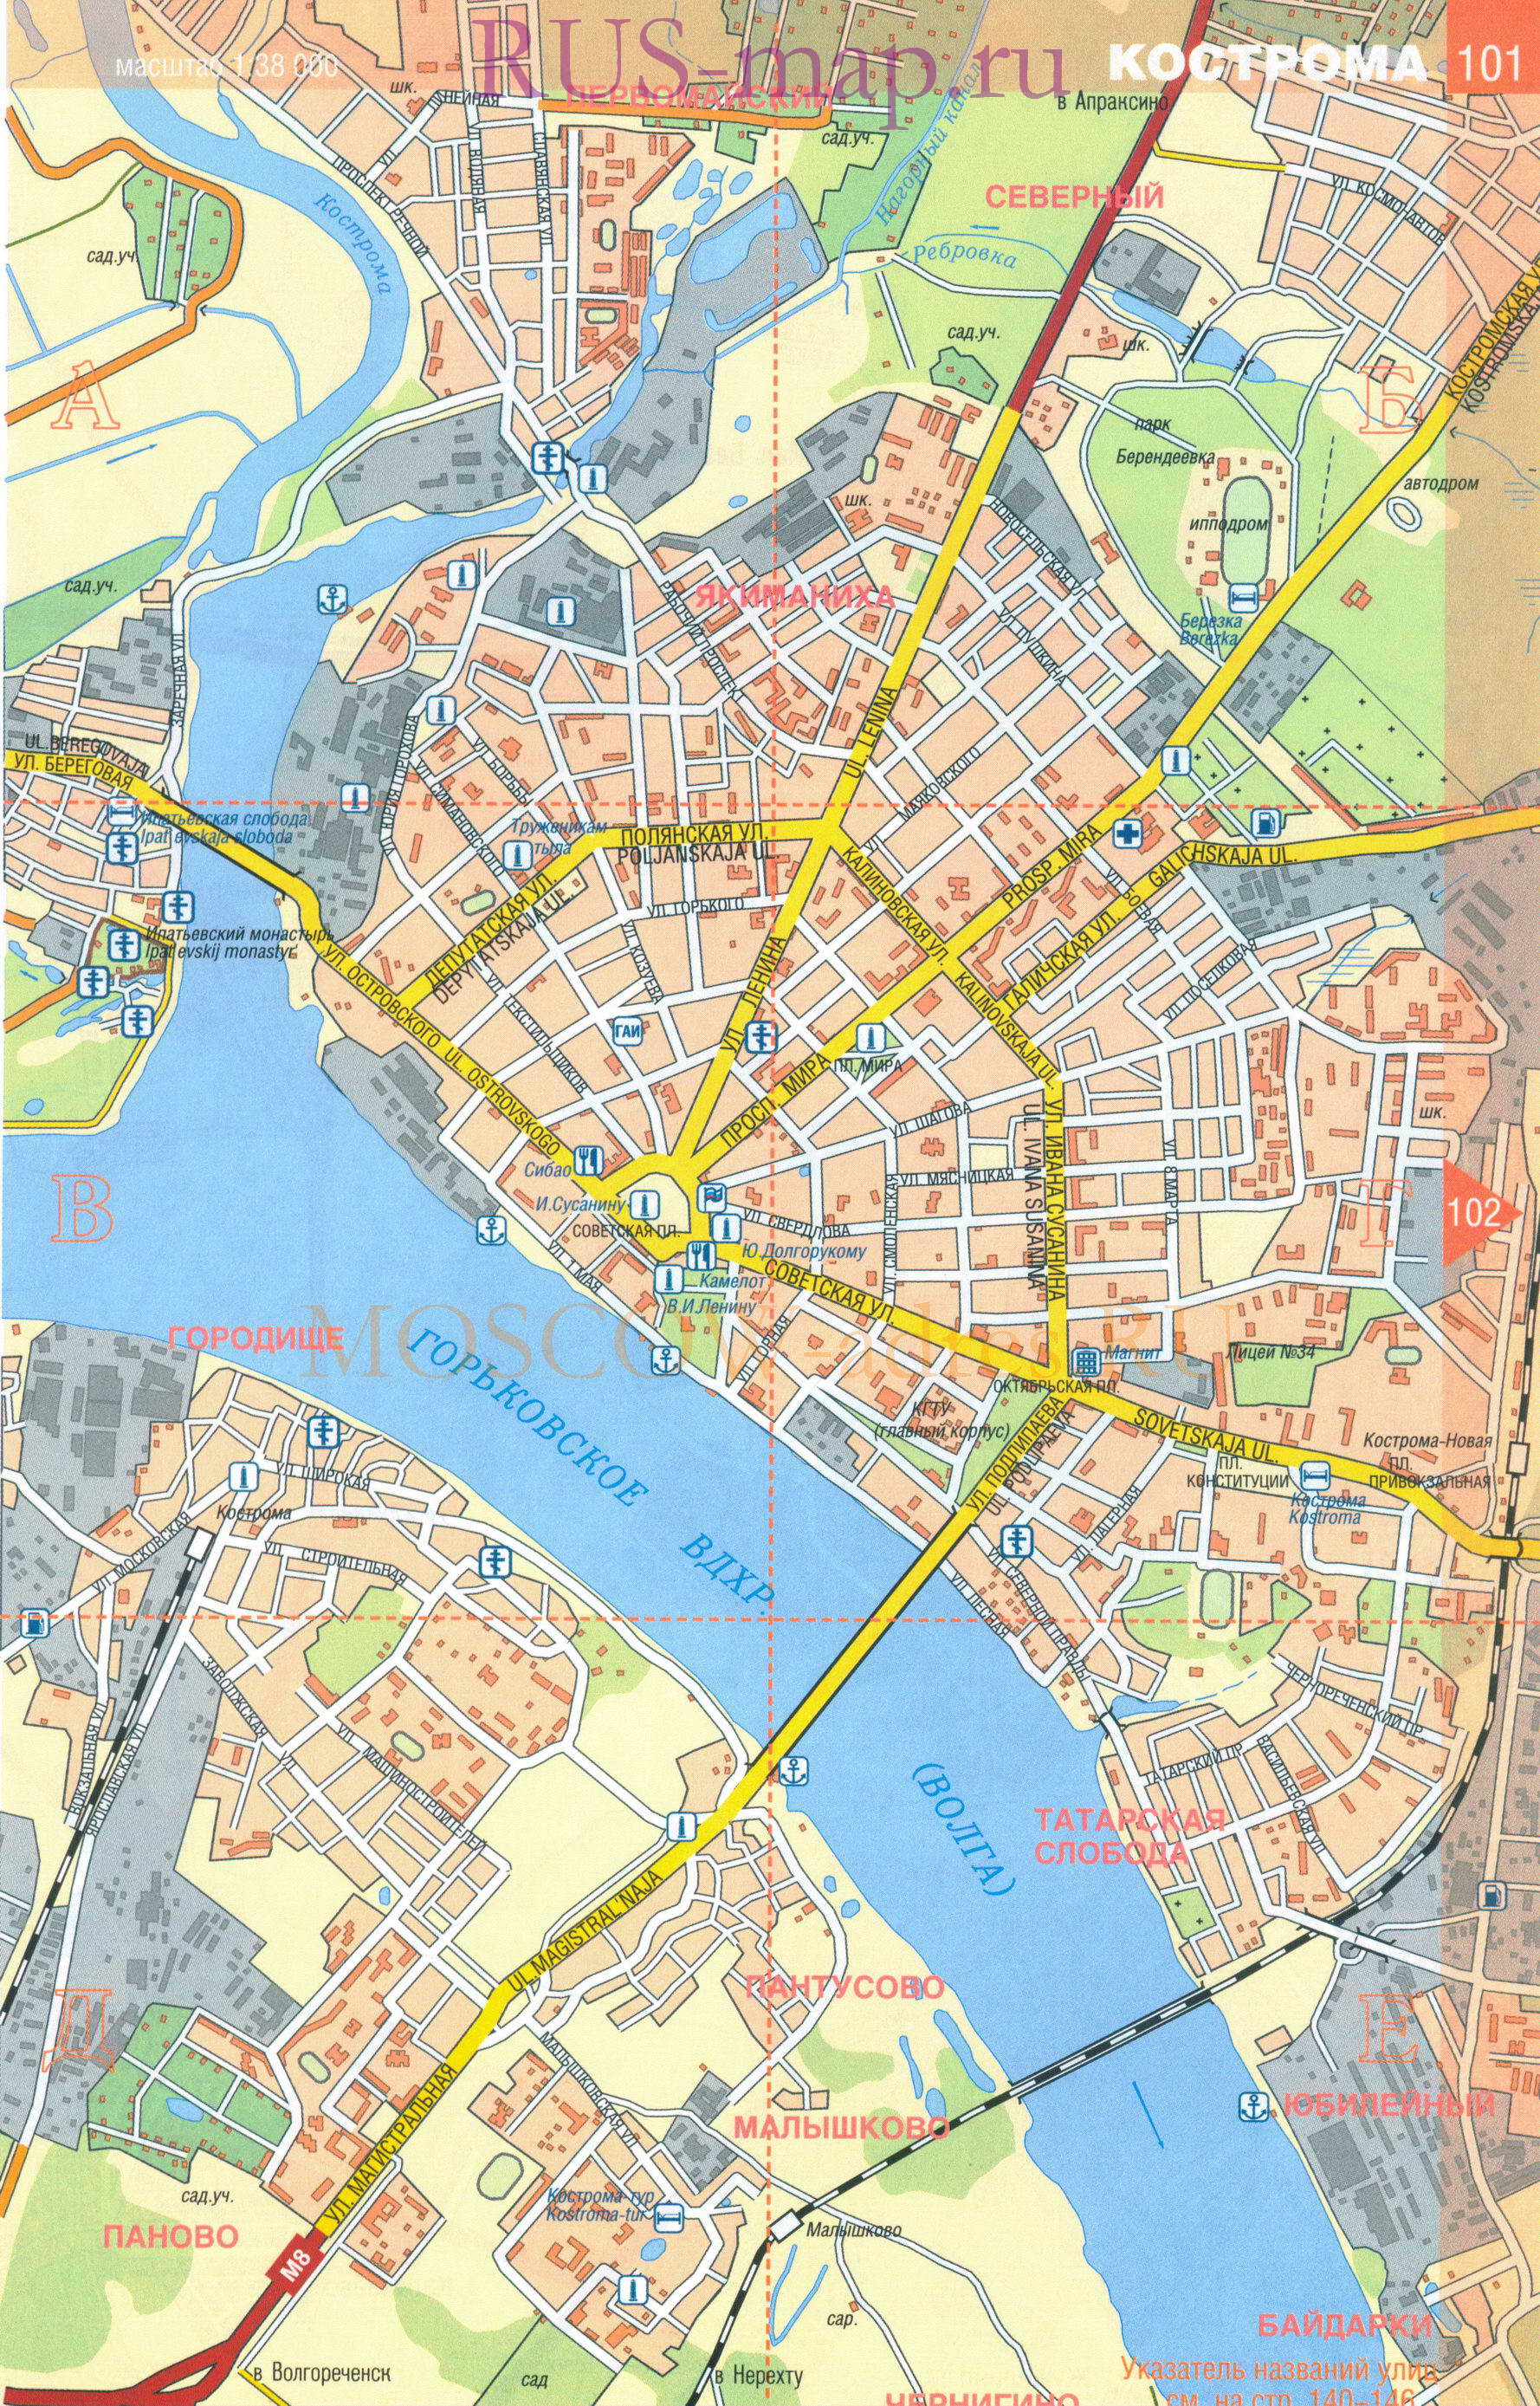 Кострома. Карта города Кострома масштаба 1см:380м с названиями улиц и номерами домов, B0 - 